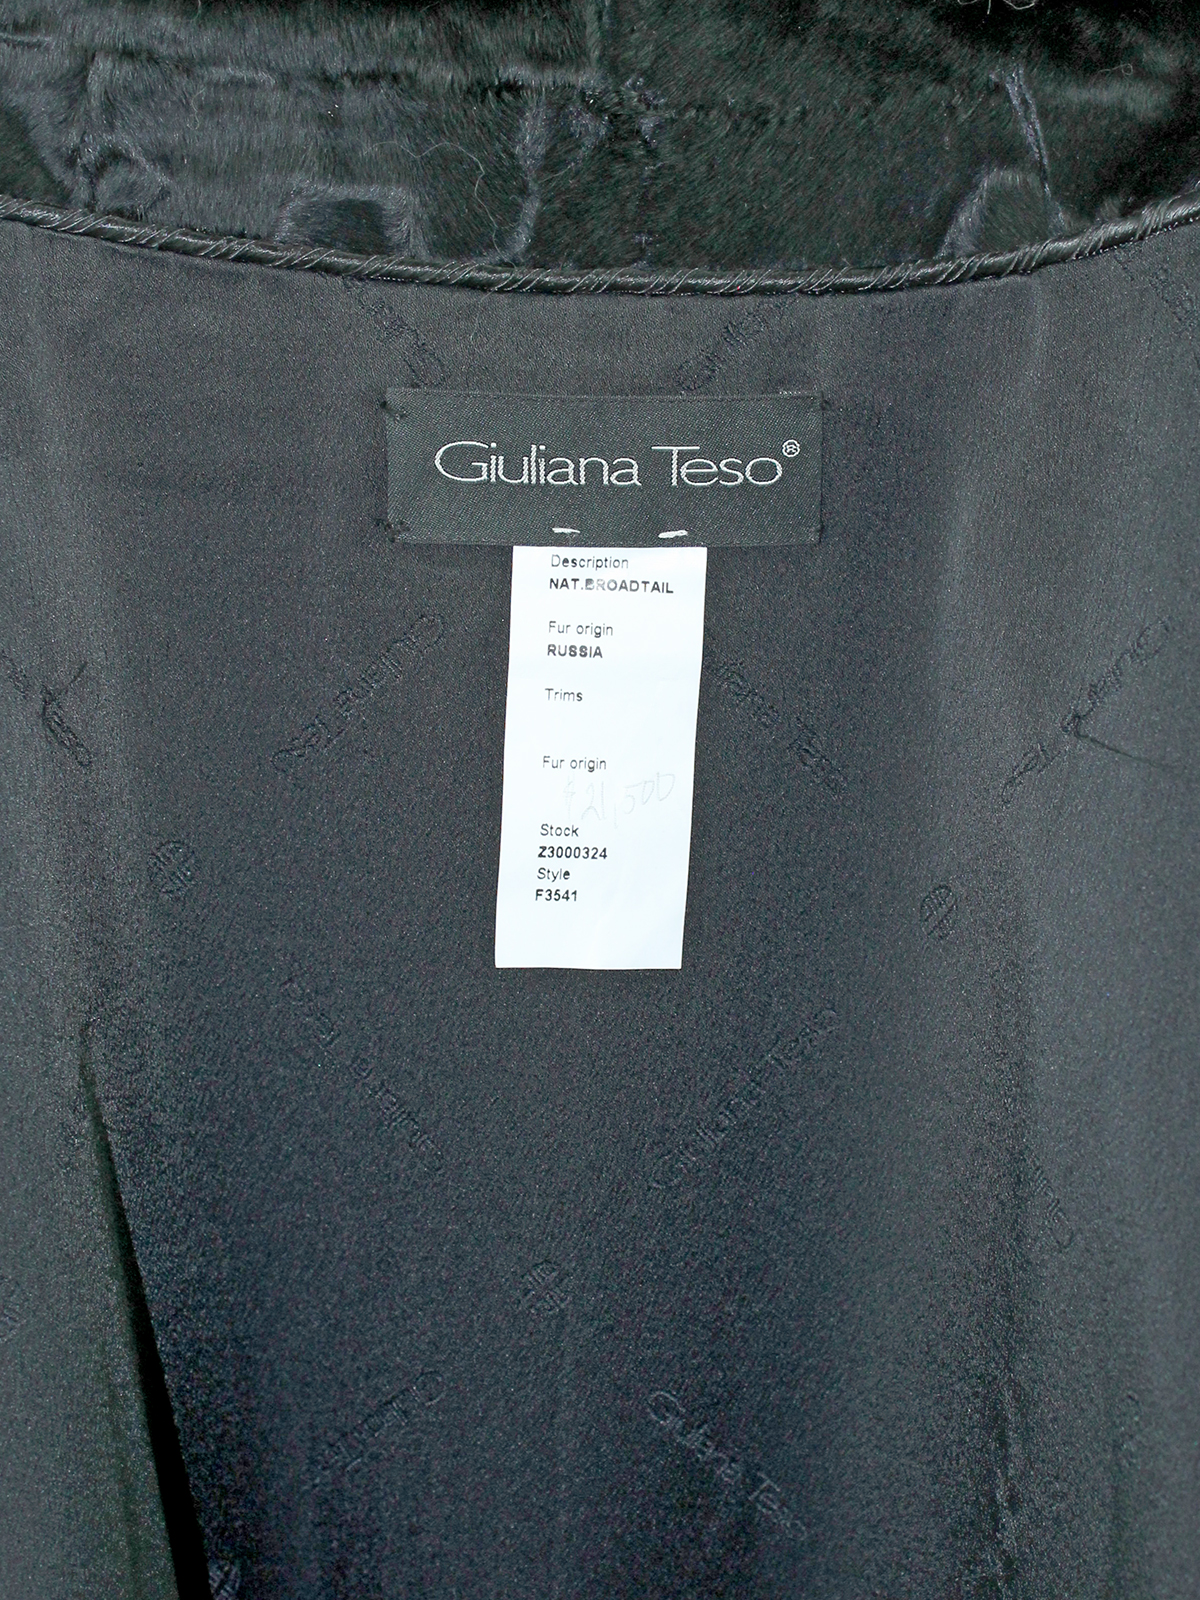 Giuliana Teso Black Lamb Coat w/ Beading - Estate Furs